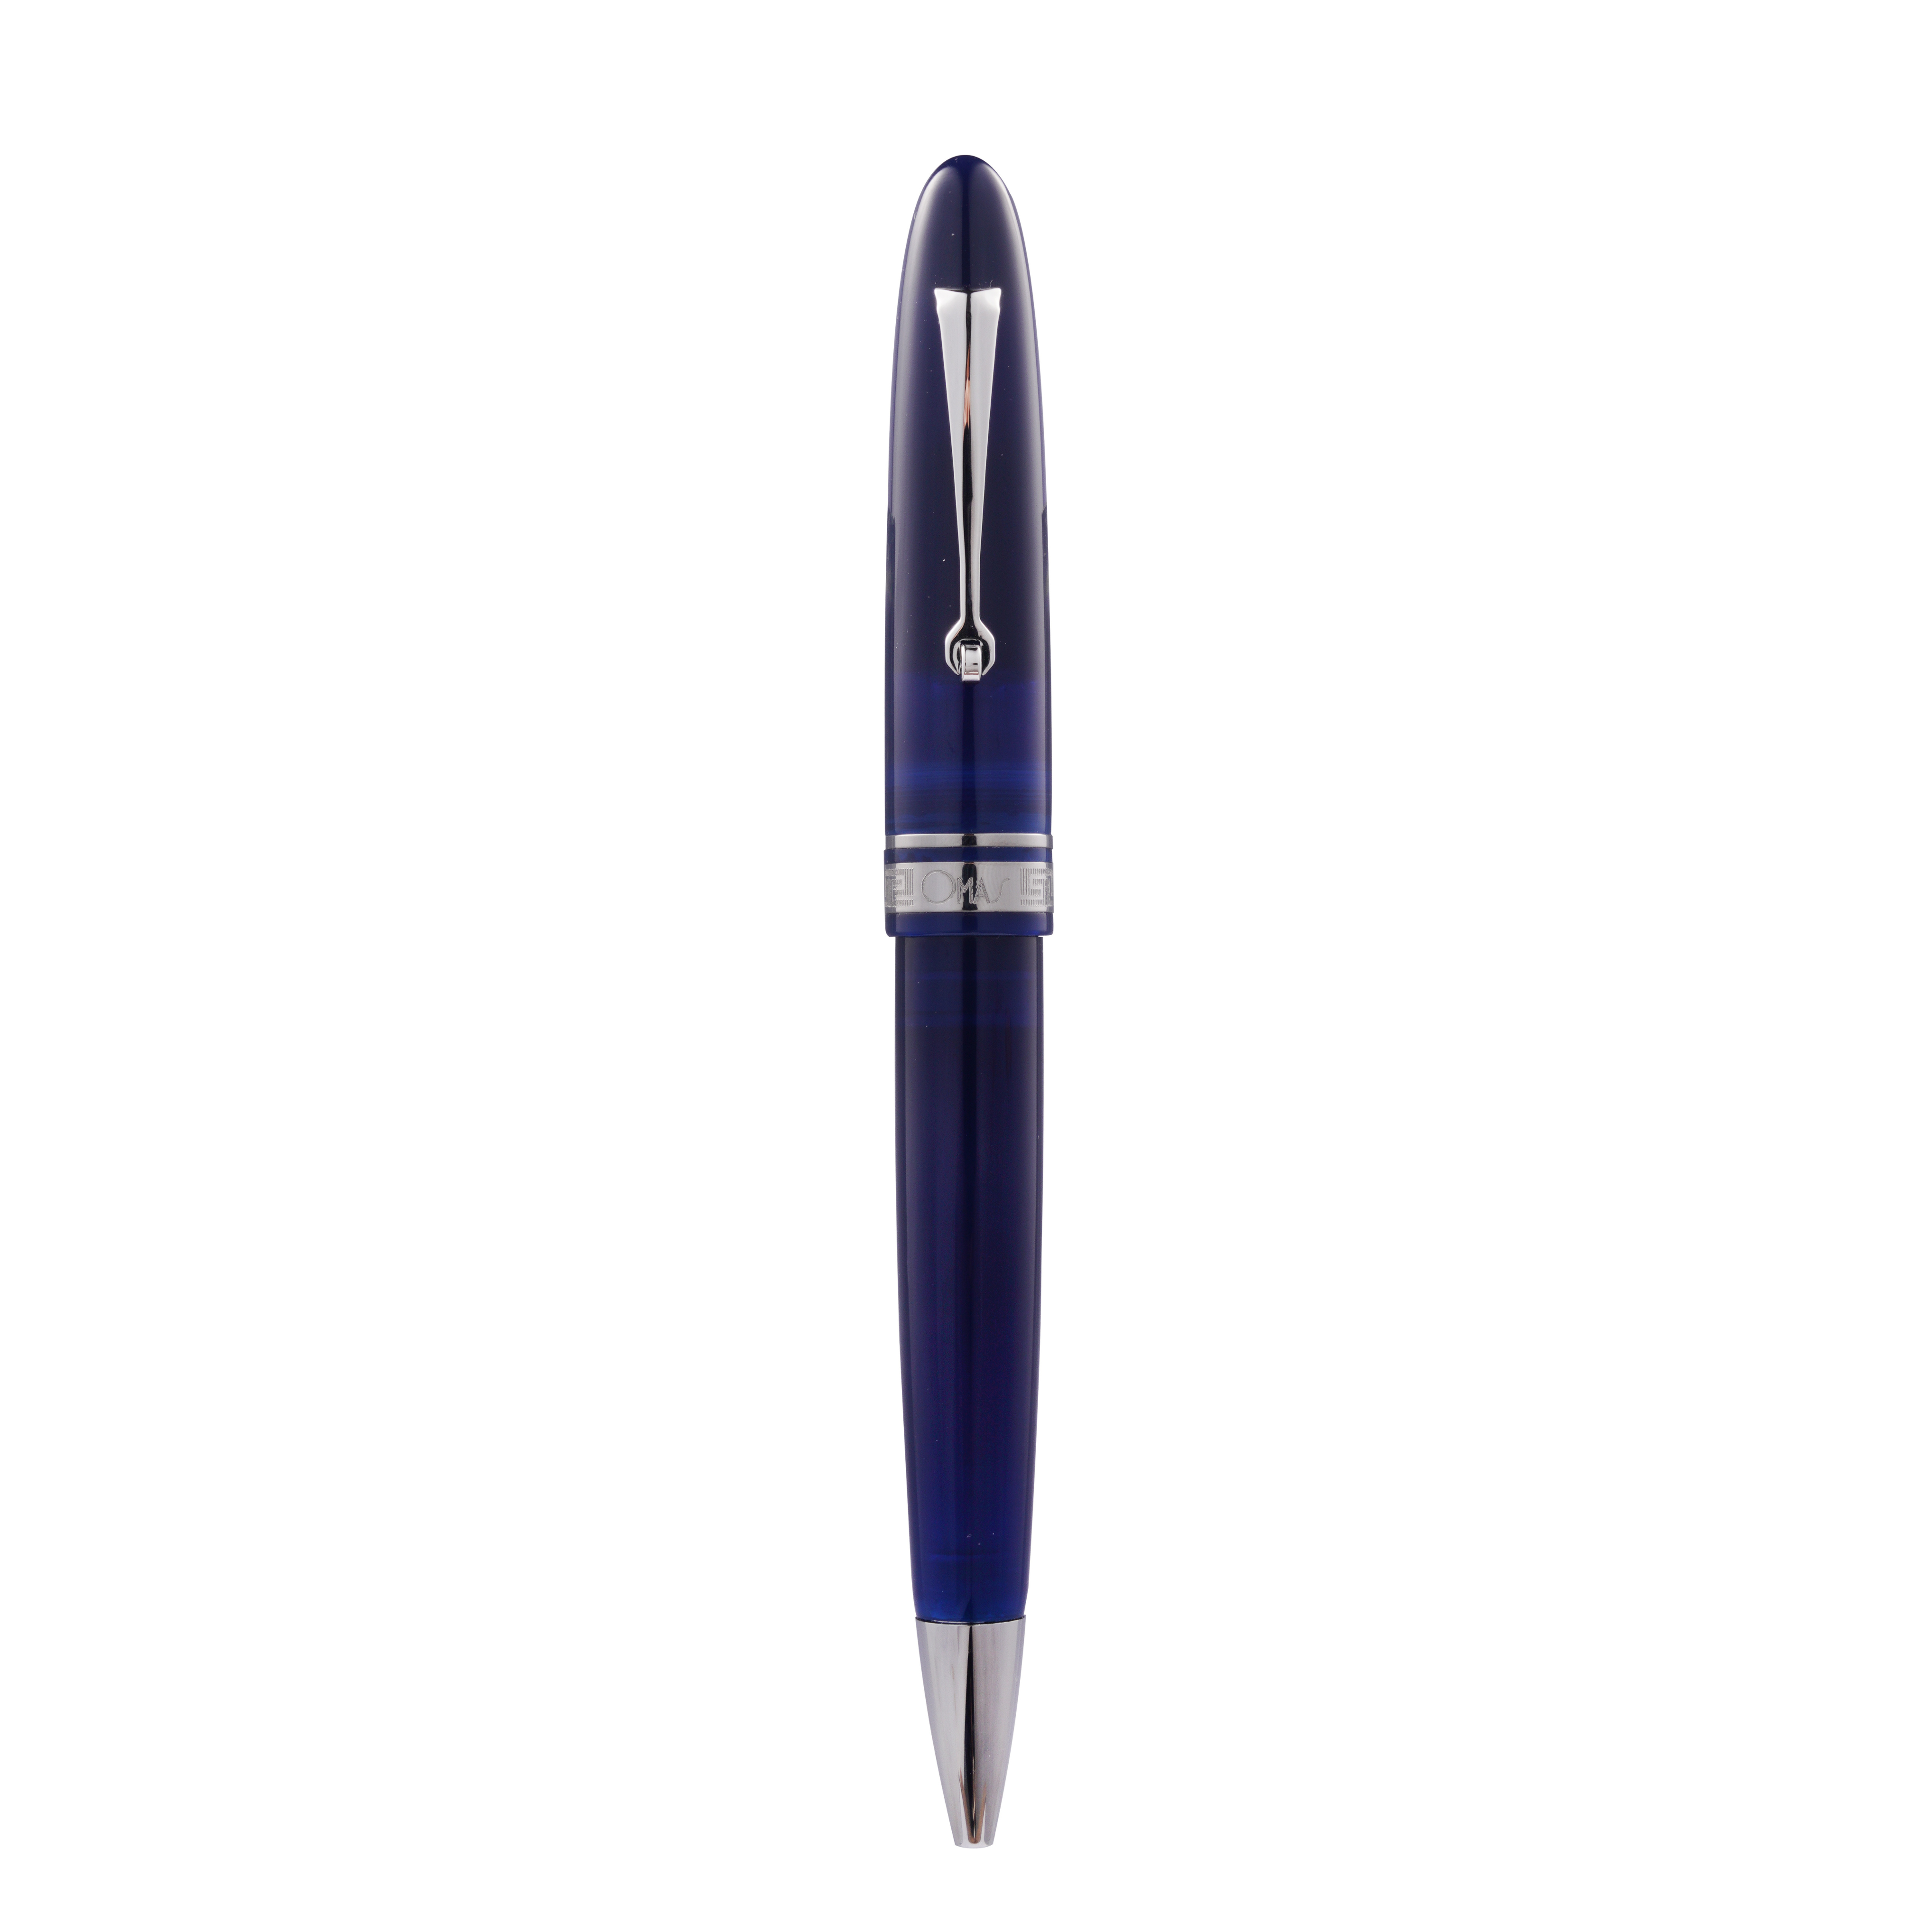 Omas Ogiva Ballpoint Pen in Blu with Silver Trim